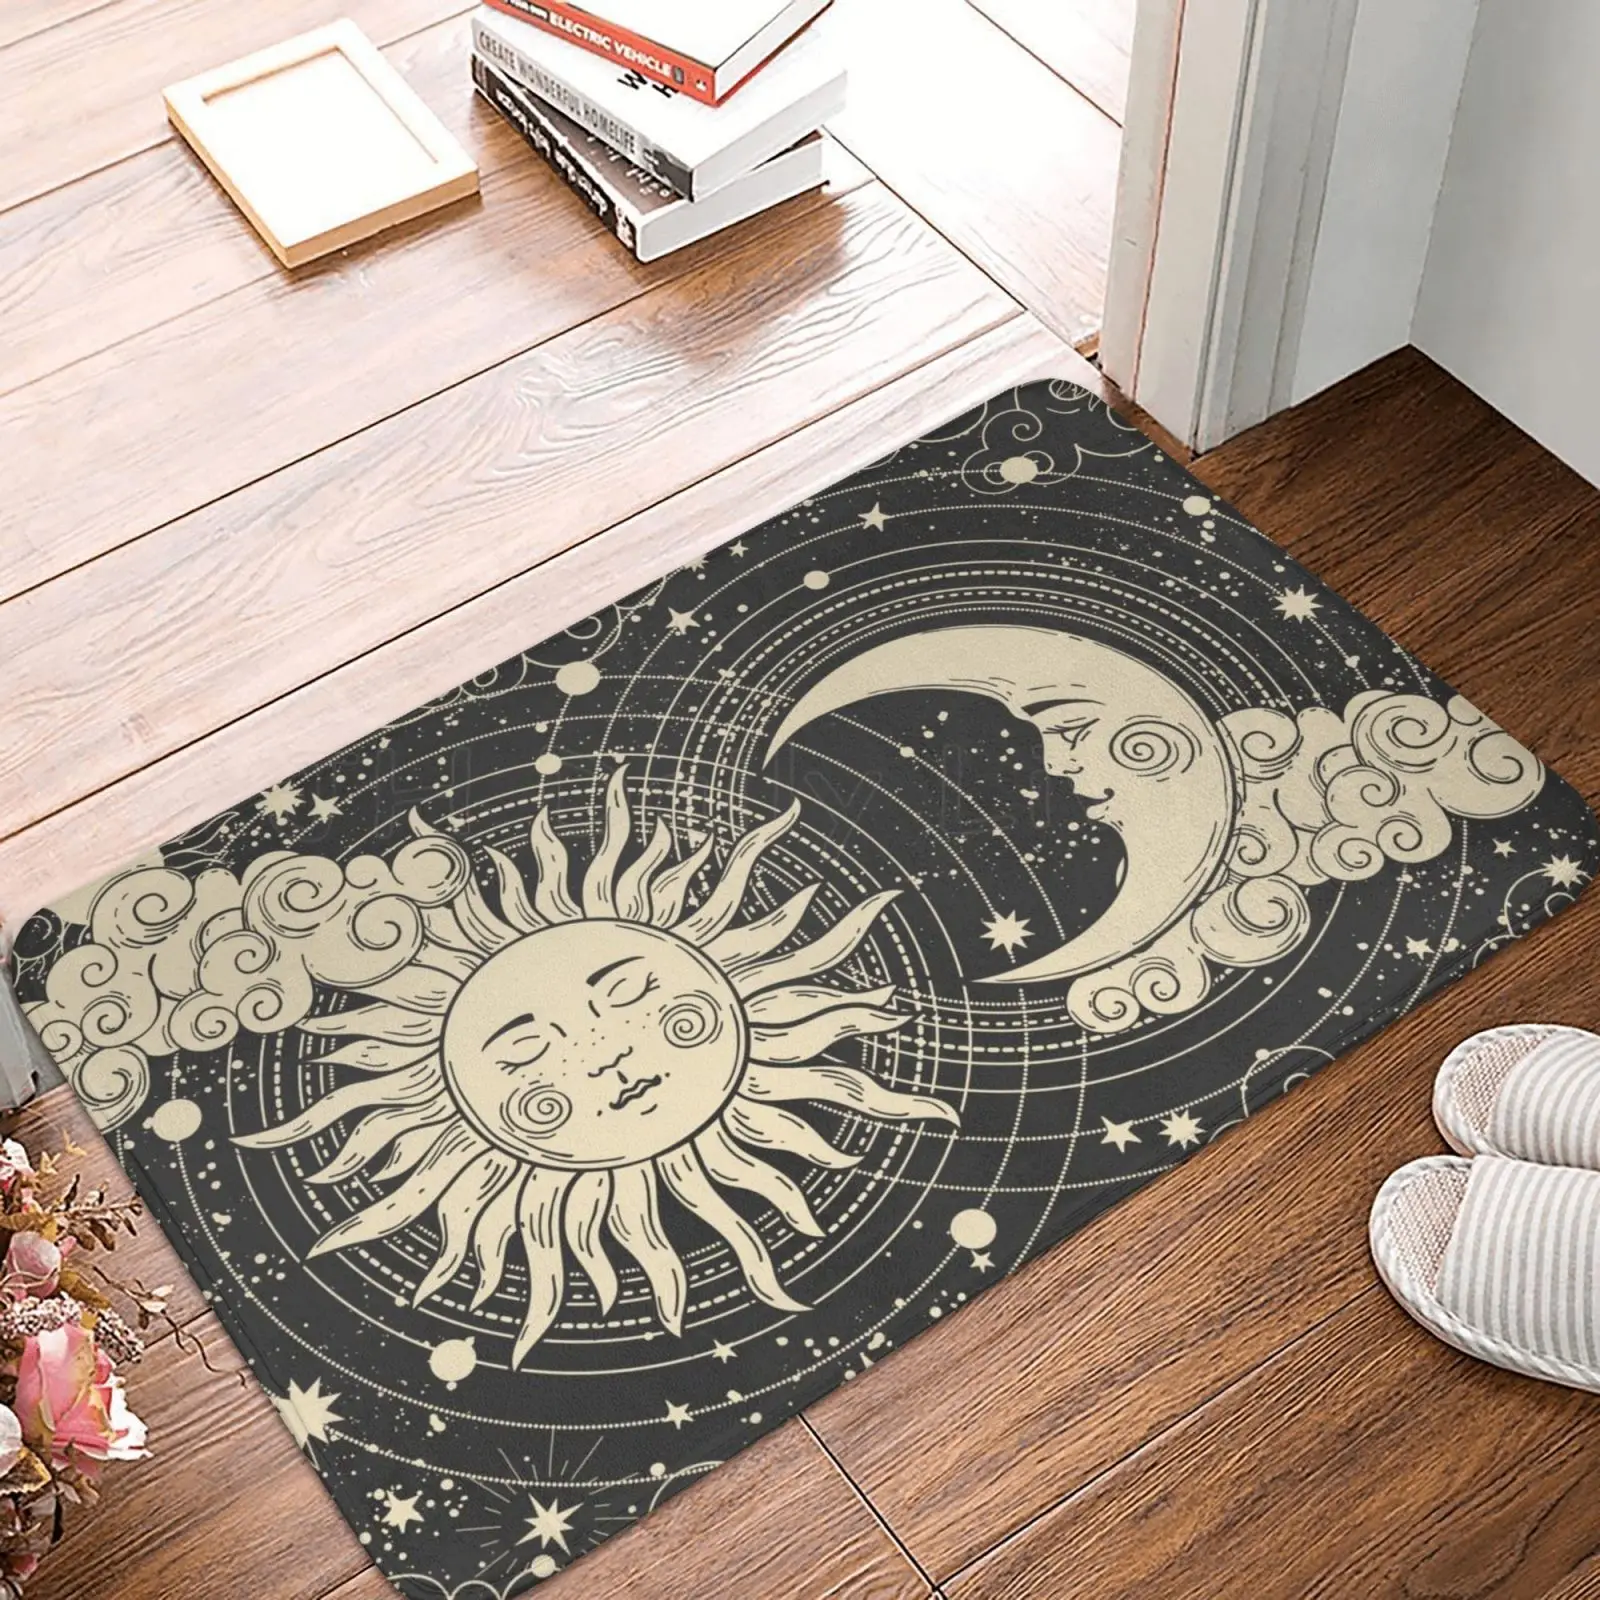 

Tarot Sun Moon Witchy Astrology Night Psychedelic Doormat Anti-Slip Bath Mat Soft Cozy Bedroom Living Room Rugs 40x60cm